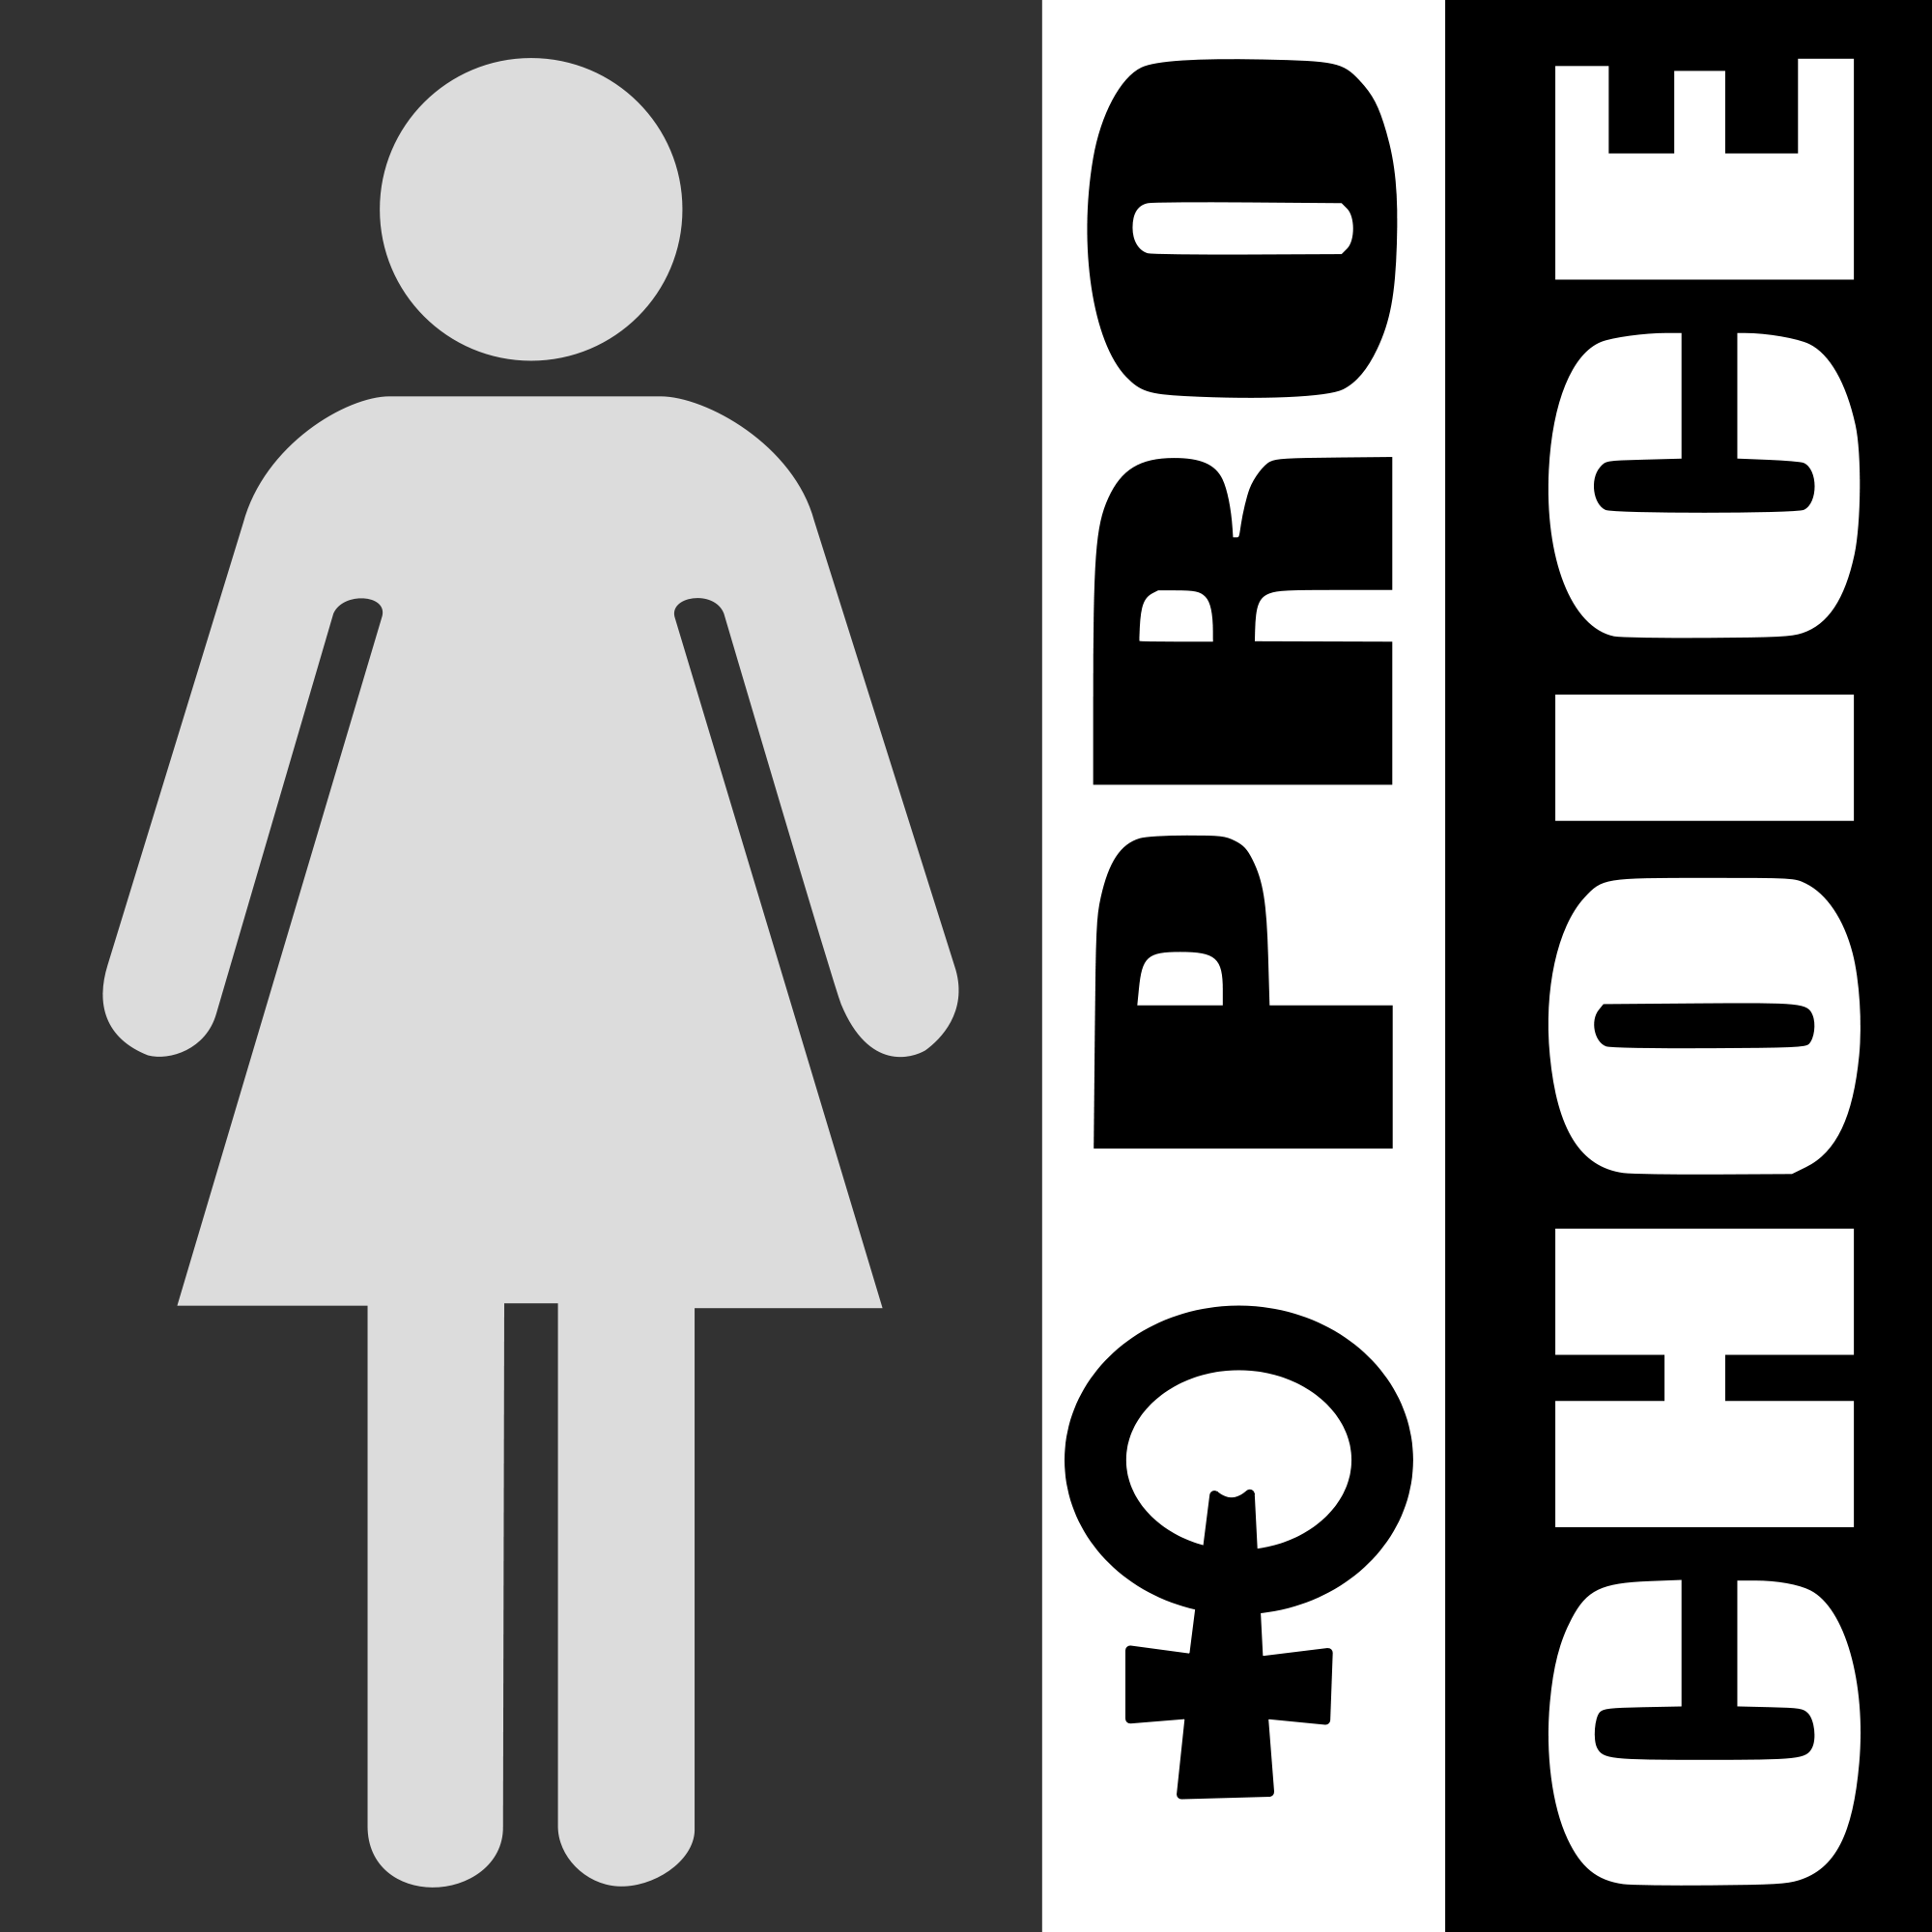 Pro-Choice Pro-Feminism Pro-U